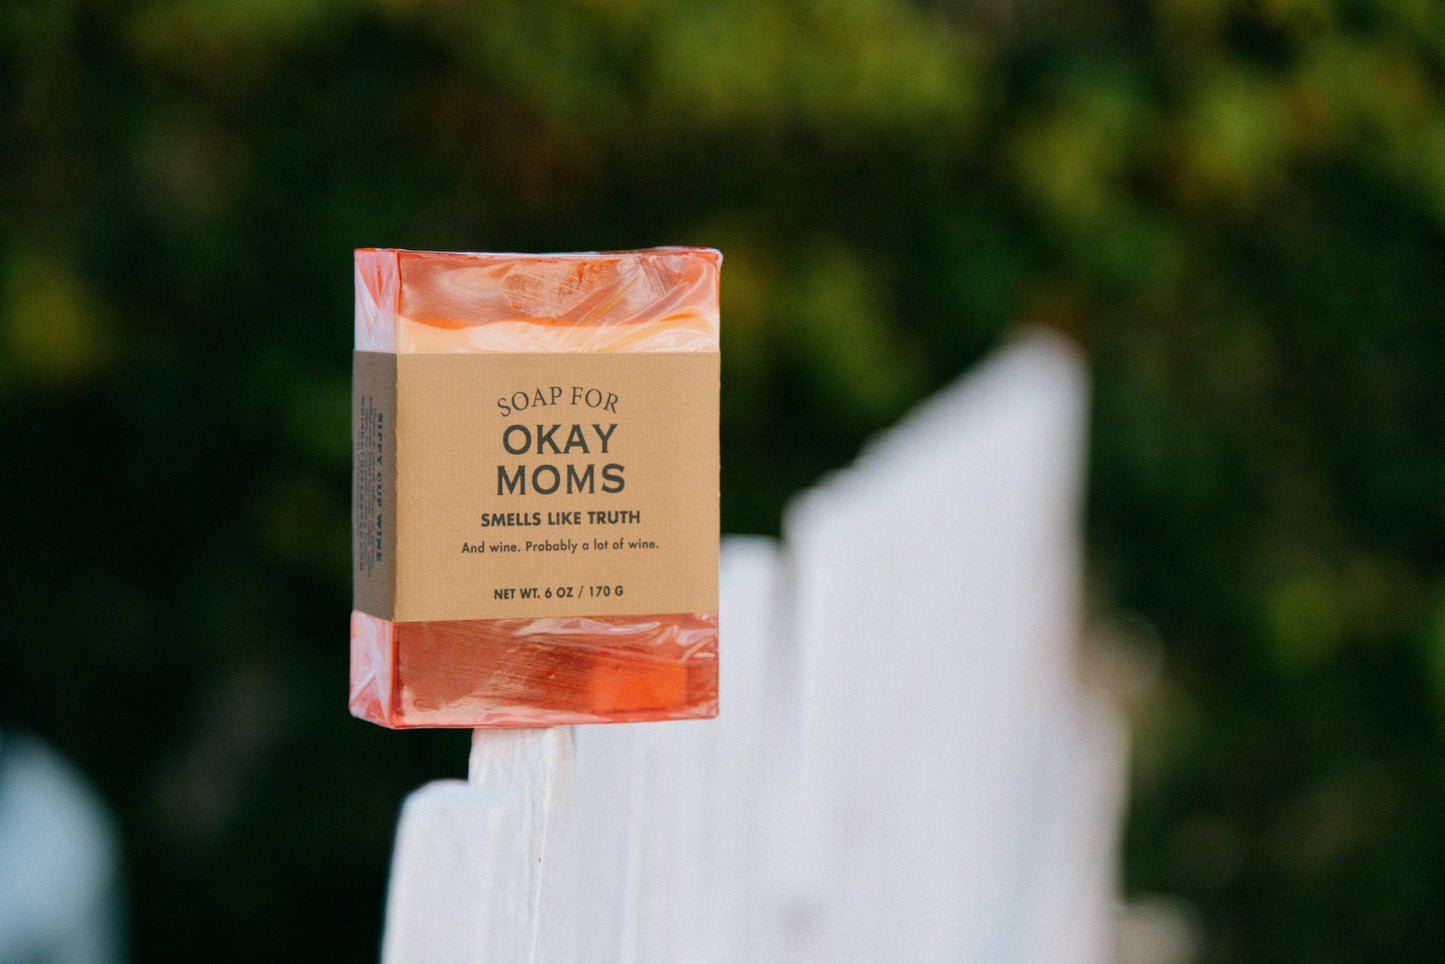 A Soap for Okay Moms | Funny Soap